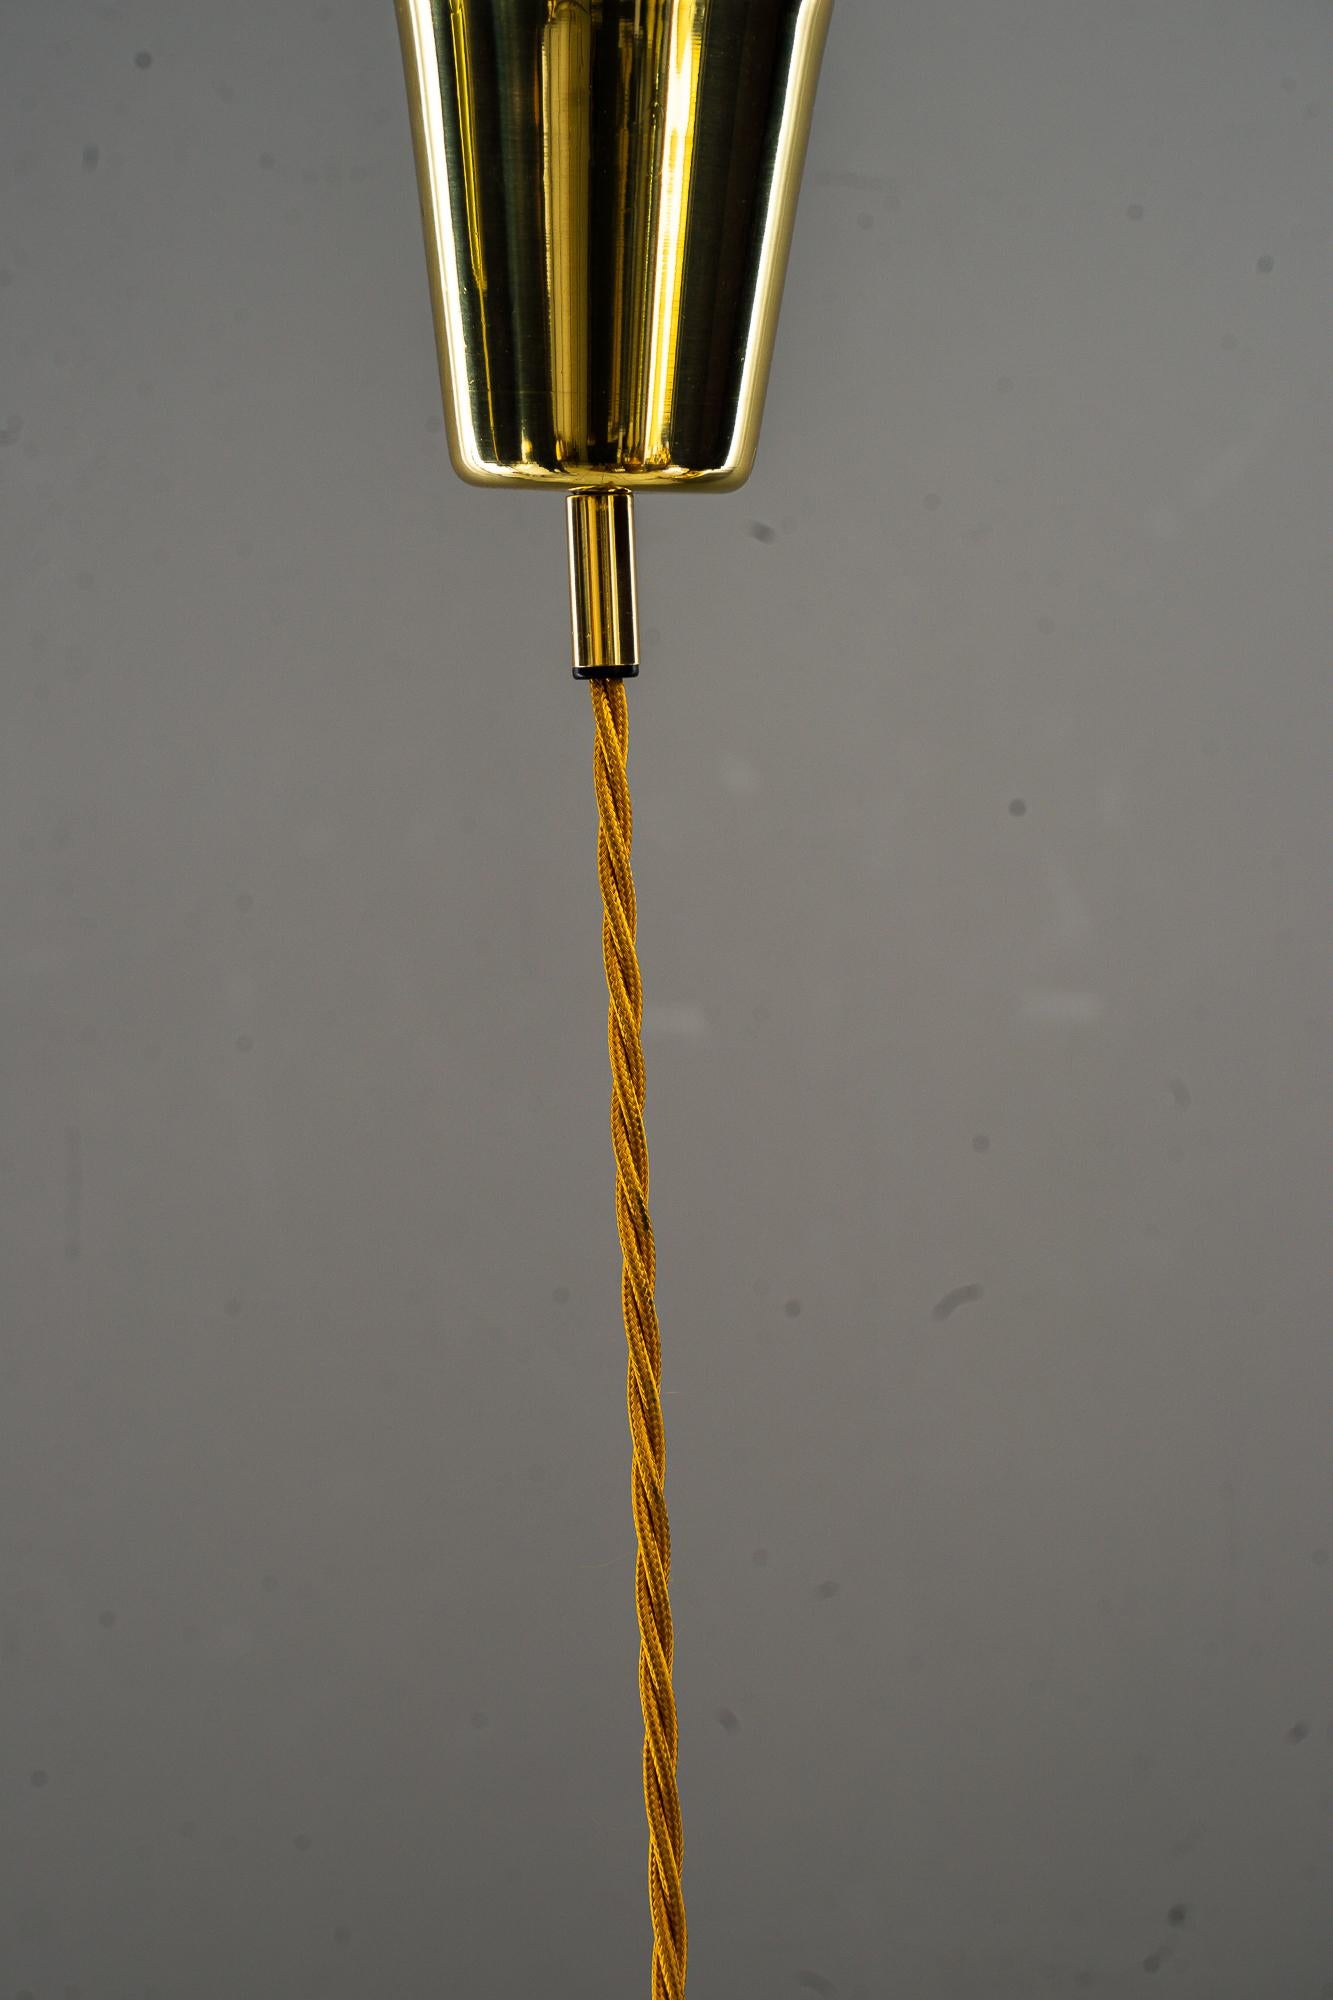 Richard Essig Pendant Germany around 1960s.
Brass parts polished and stove enameled.